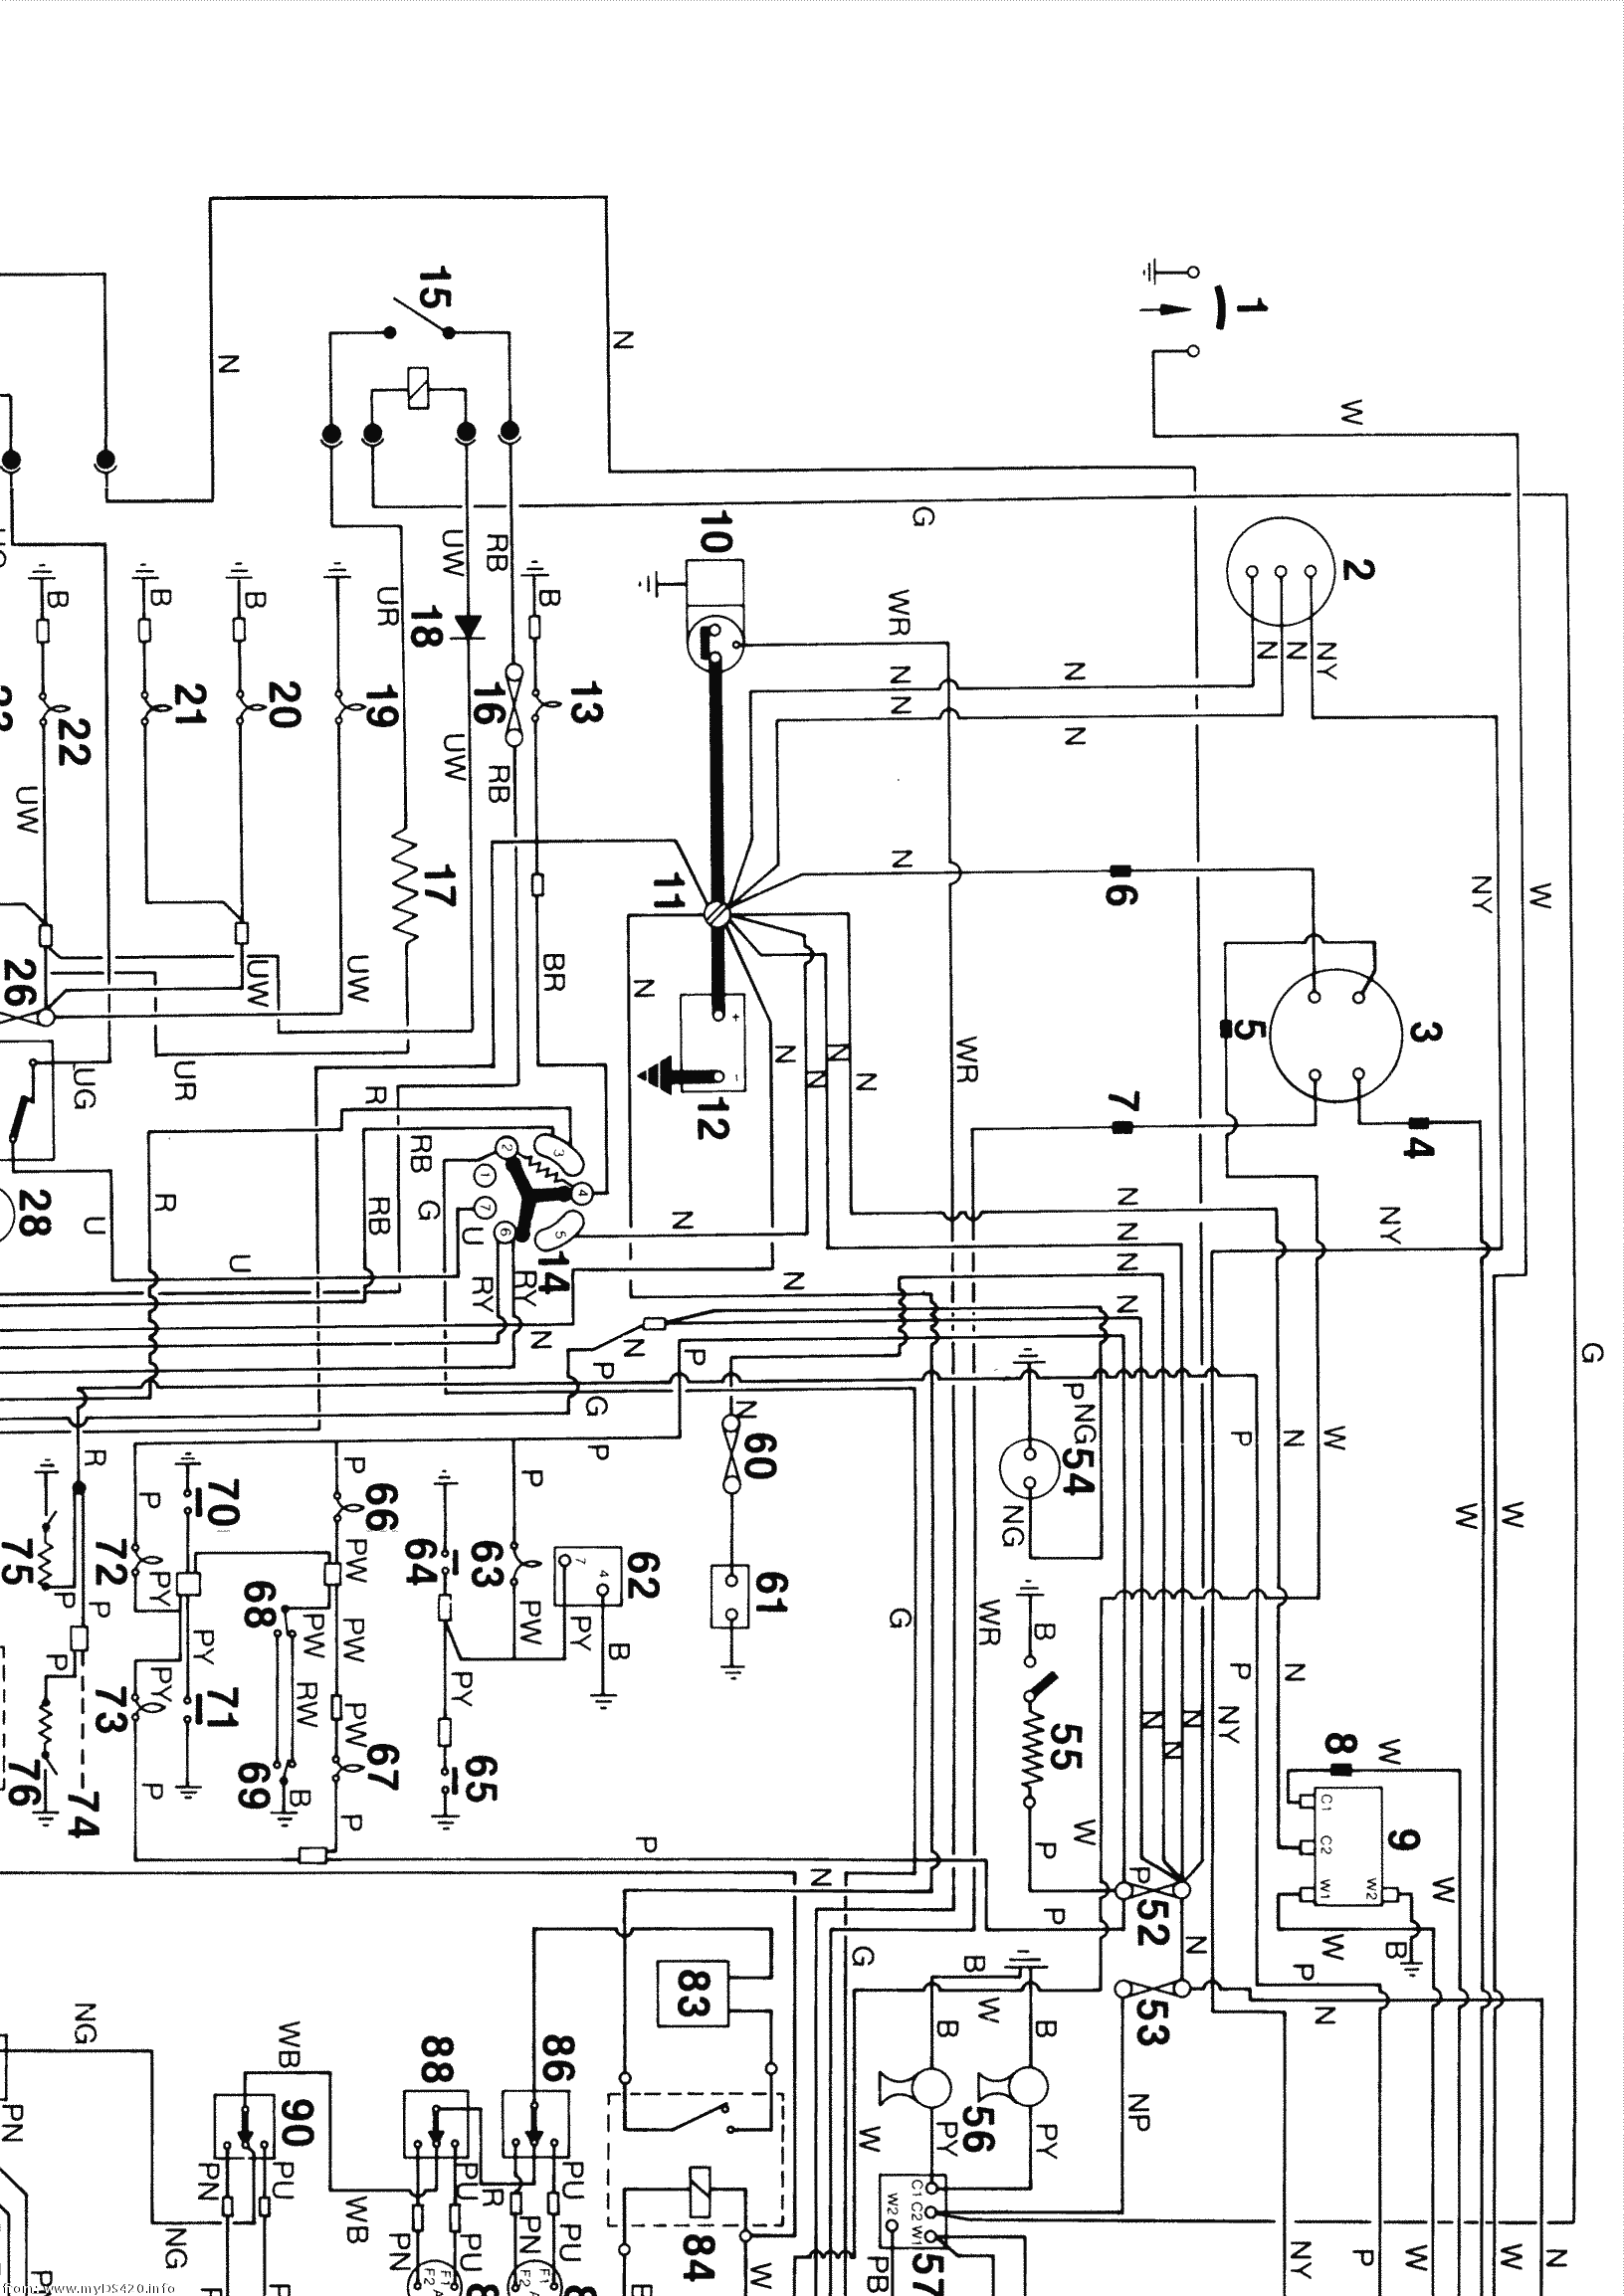 wiring diagram medium res. A4 NW (1986)